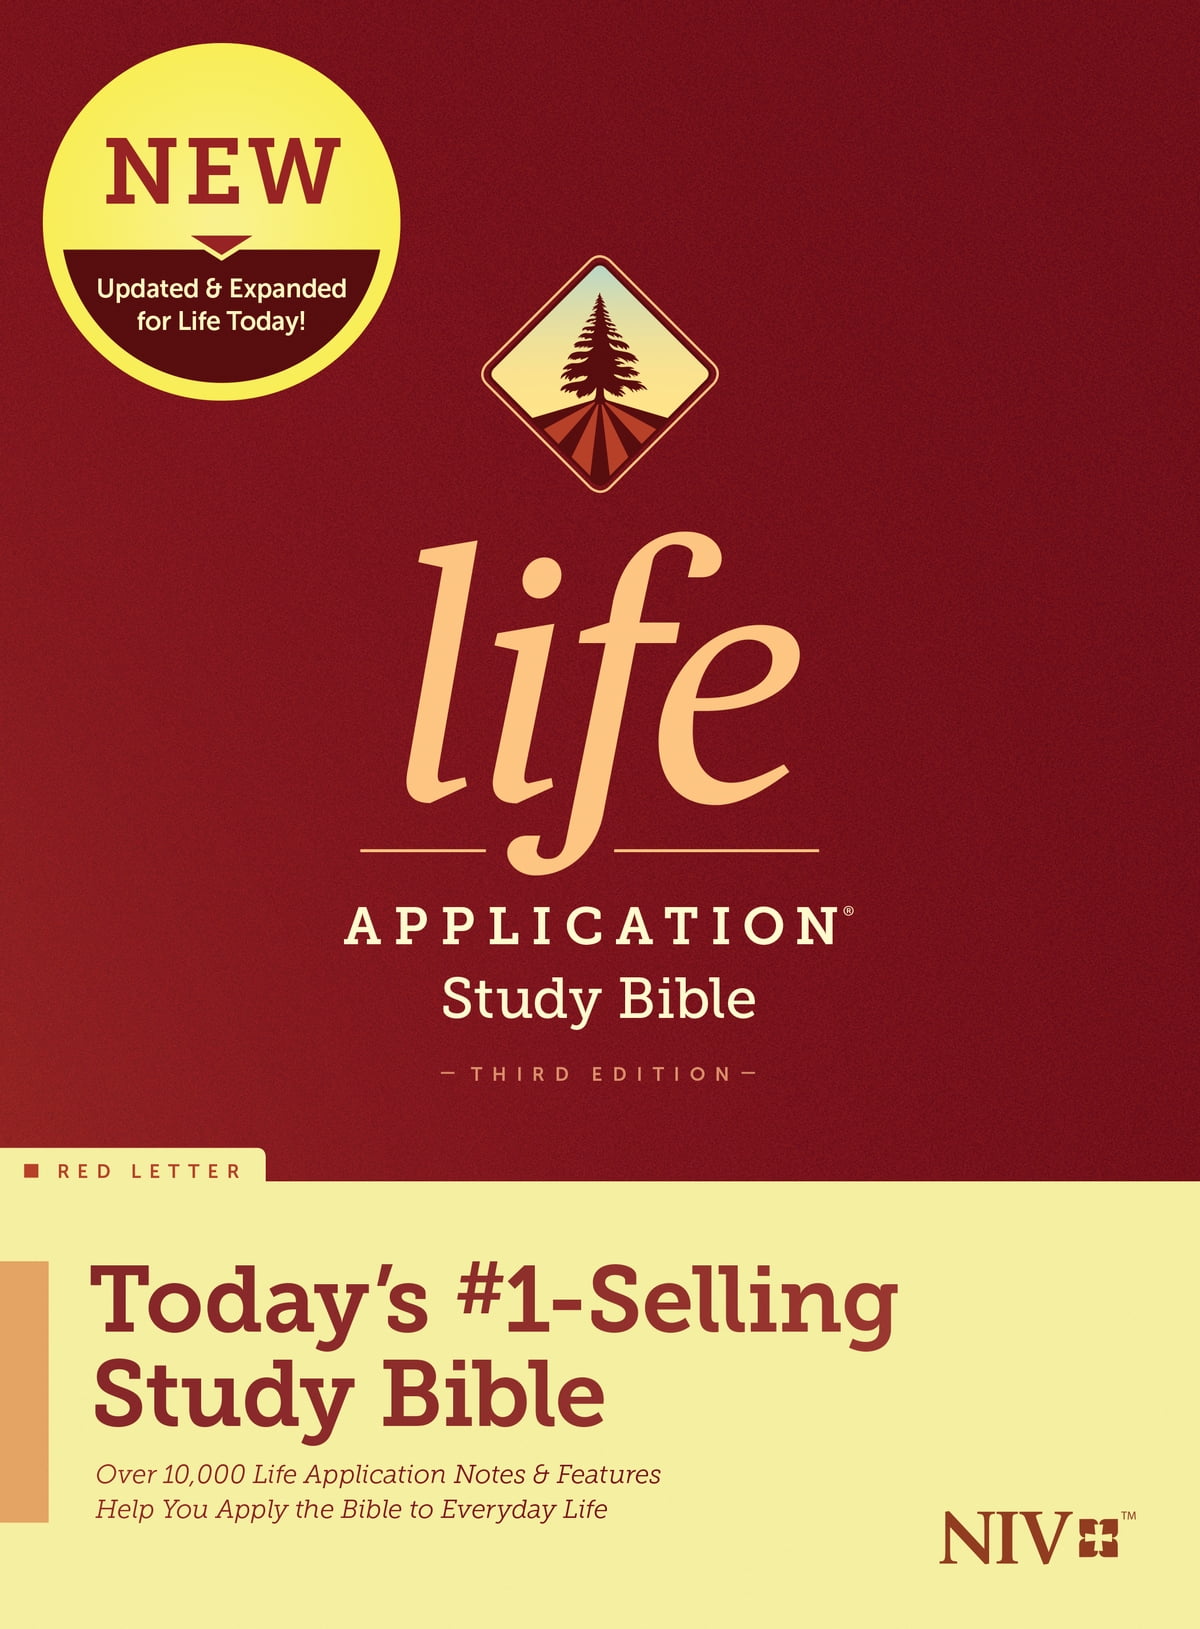 niv-life-application-study-bible-third-edition.jpg